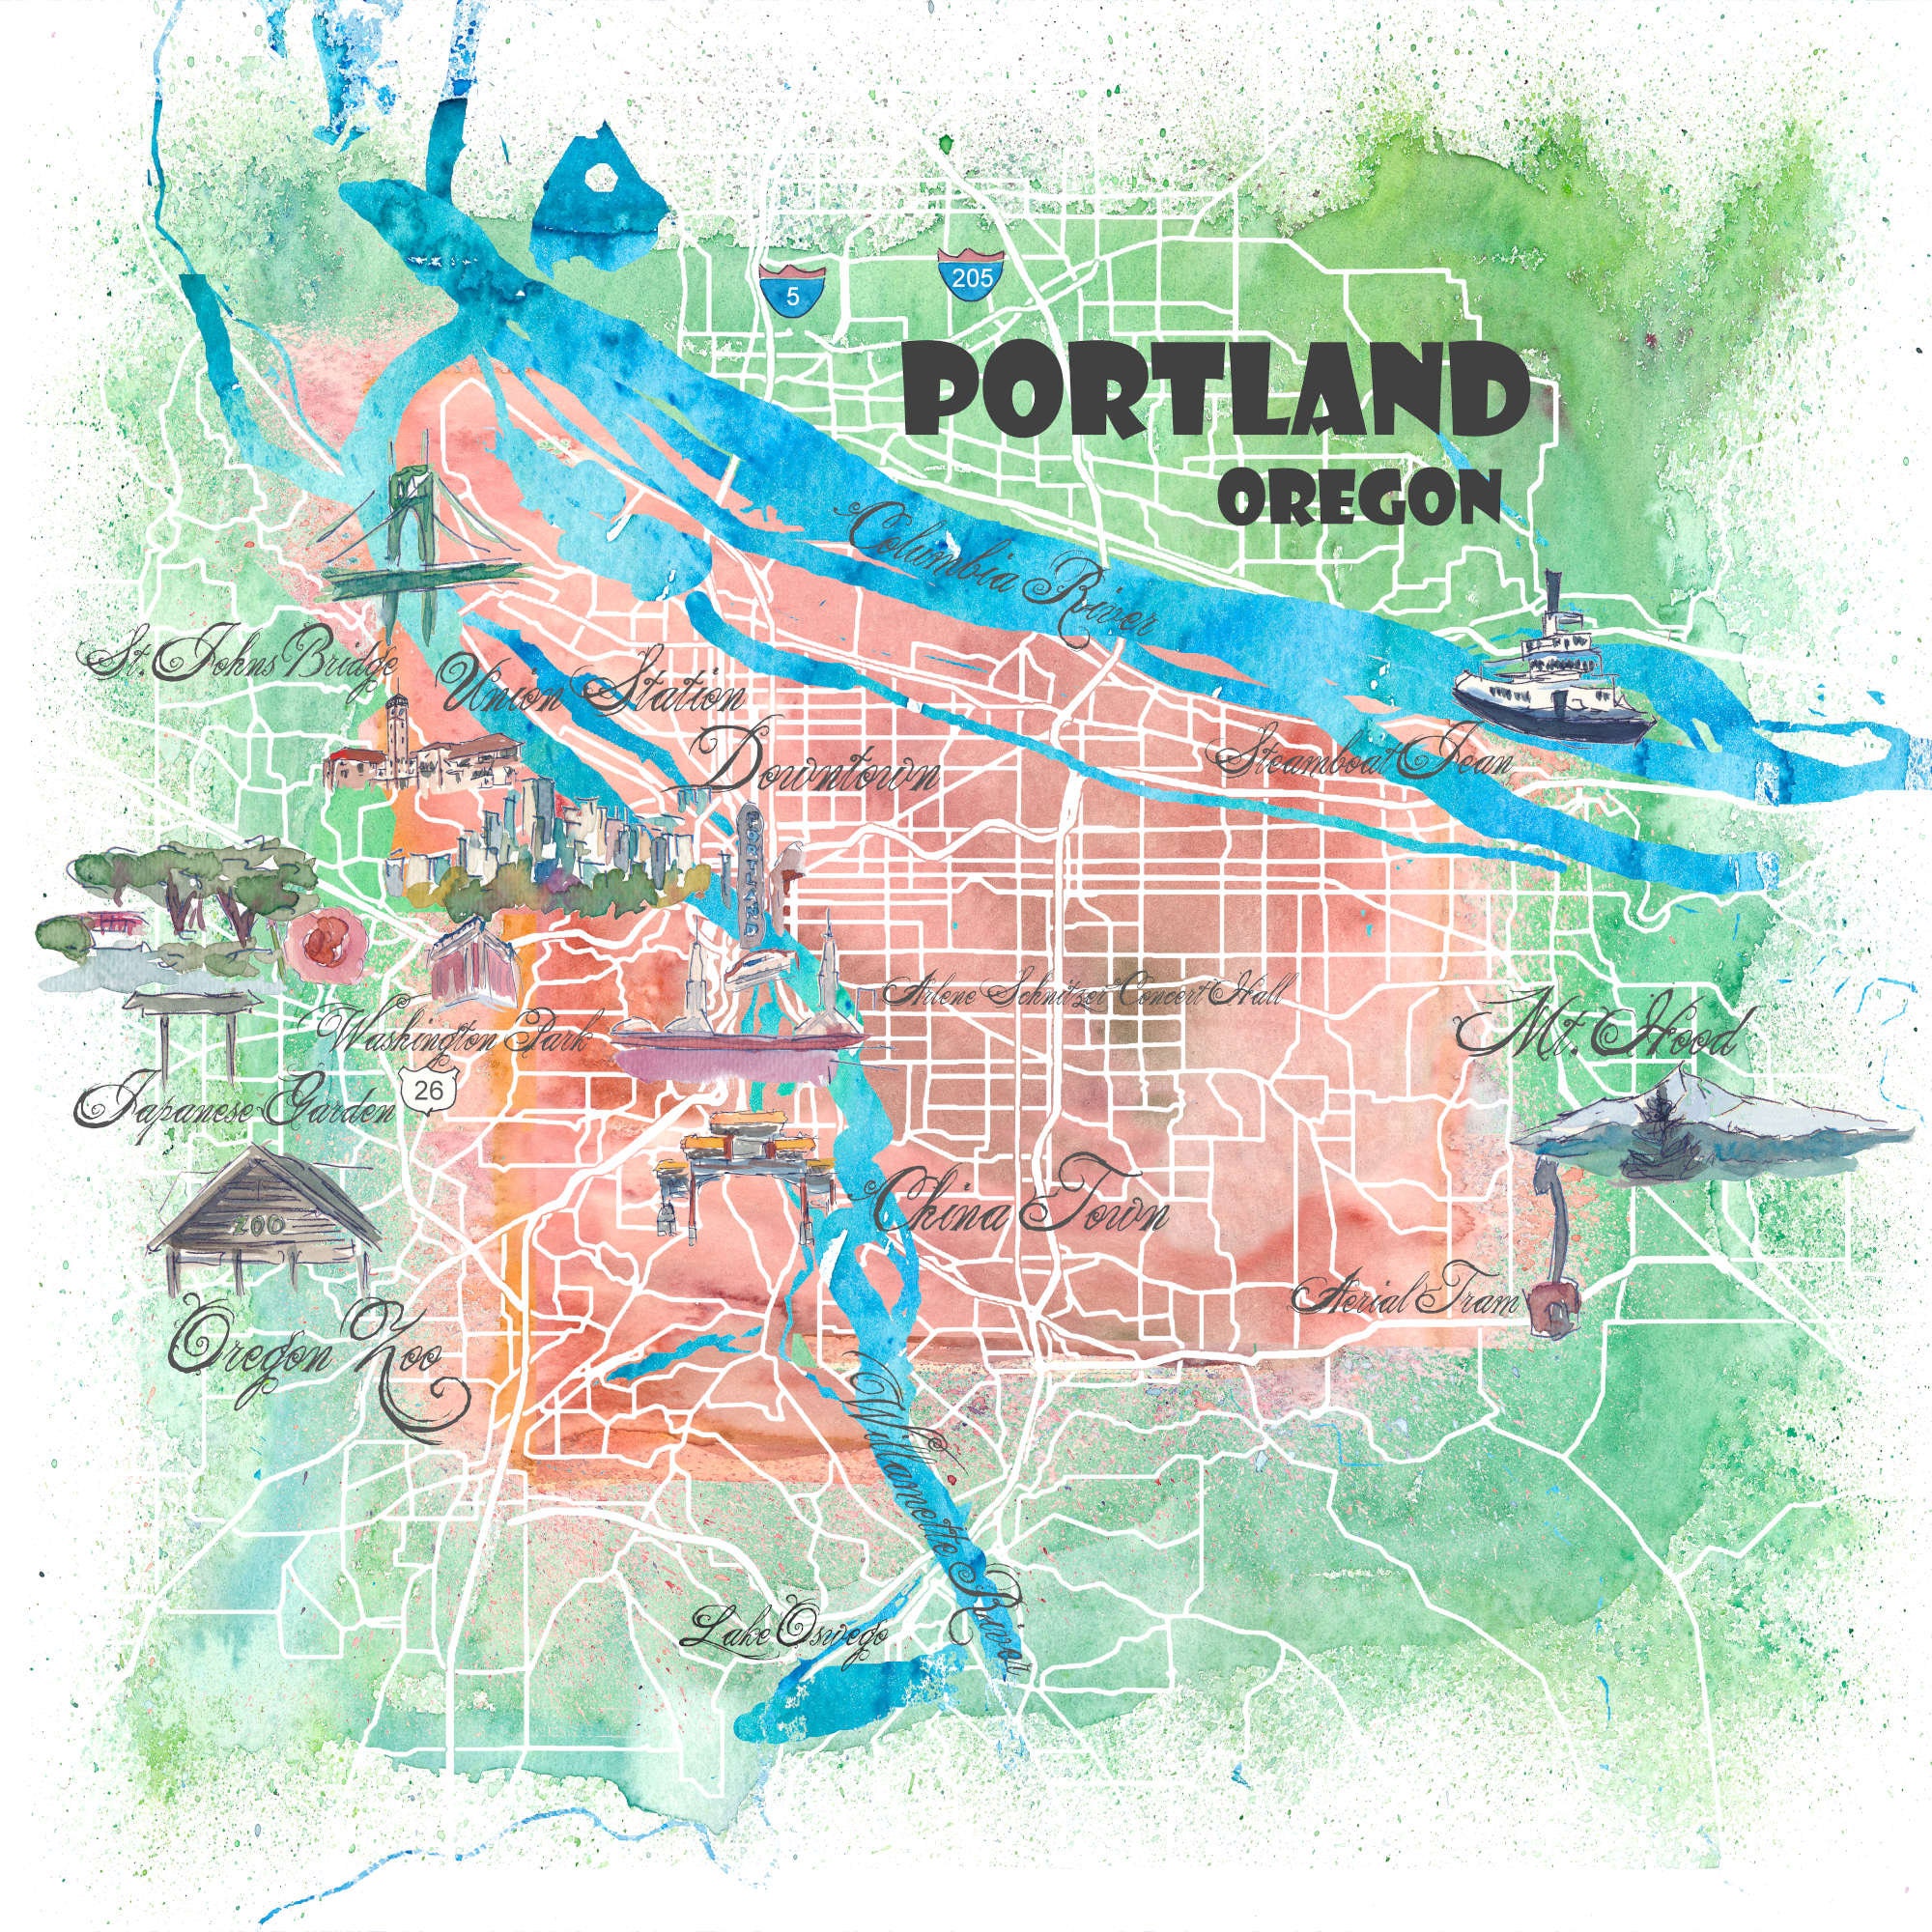 Portland Oregon Illustrated Map With Main Roads Landmarks image